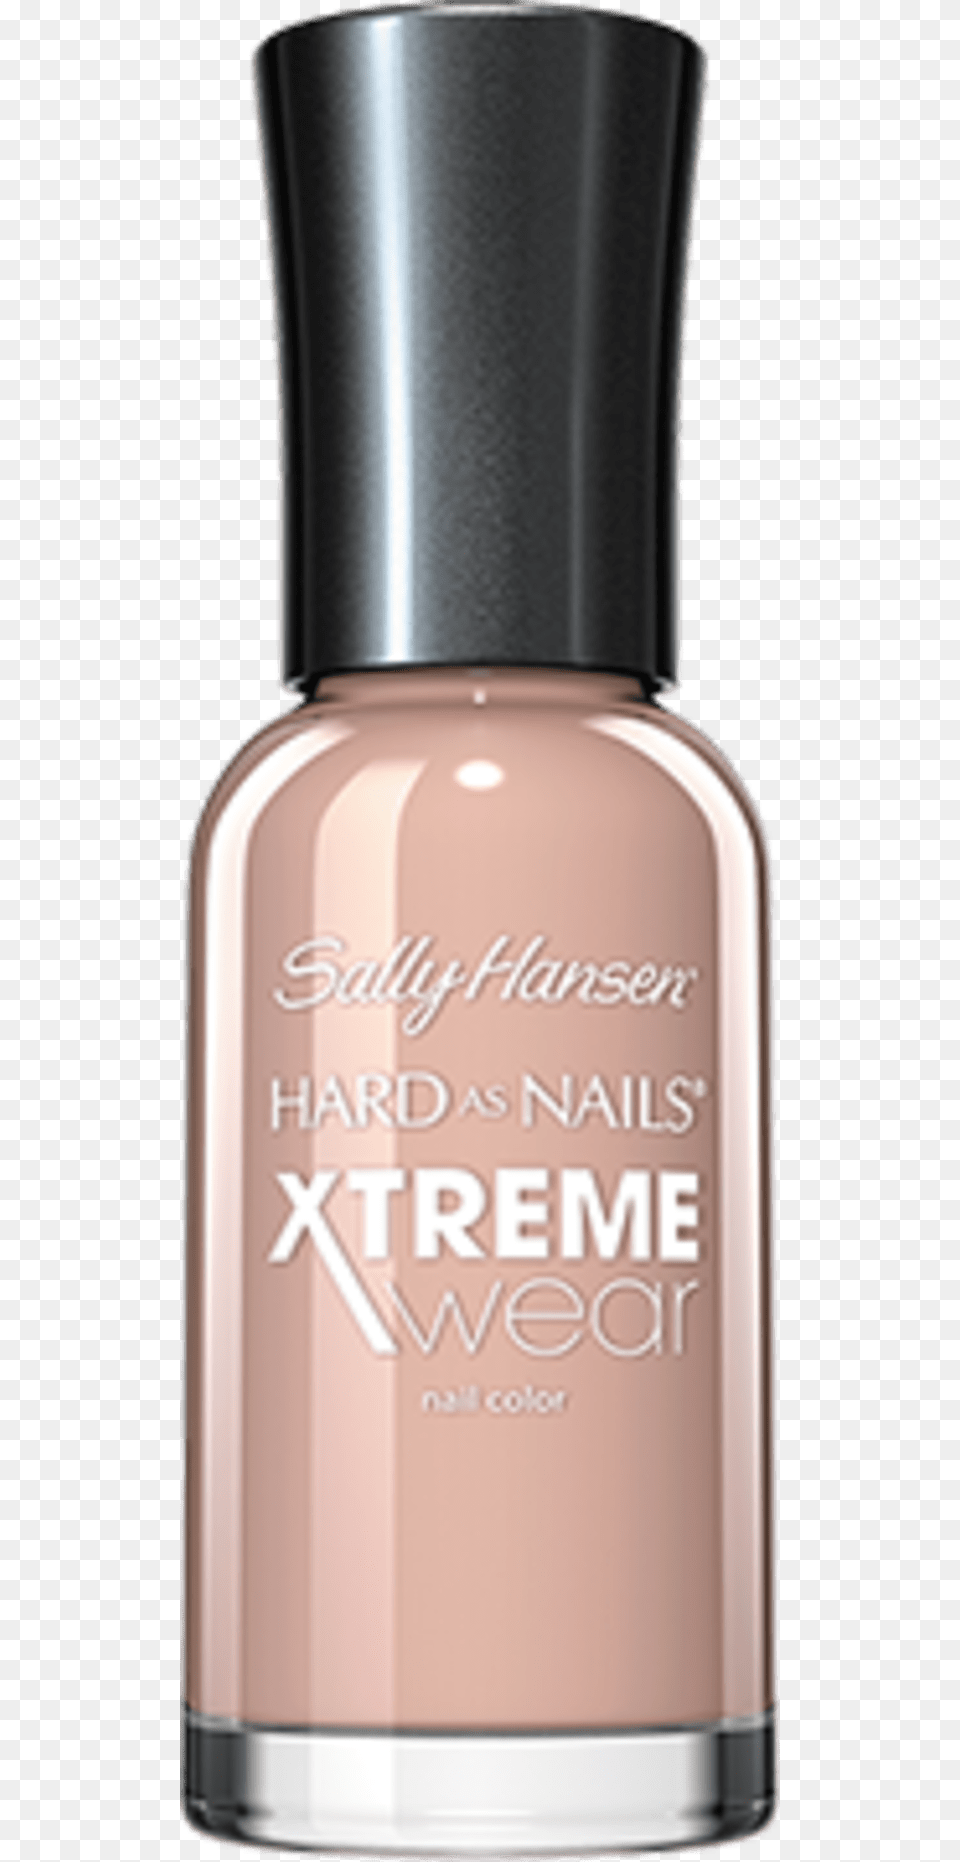 Sally Hansen Hard As Nails Xtreme Wear, Cosmetics, Bottle, Perfume Png